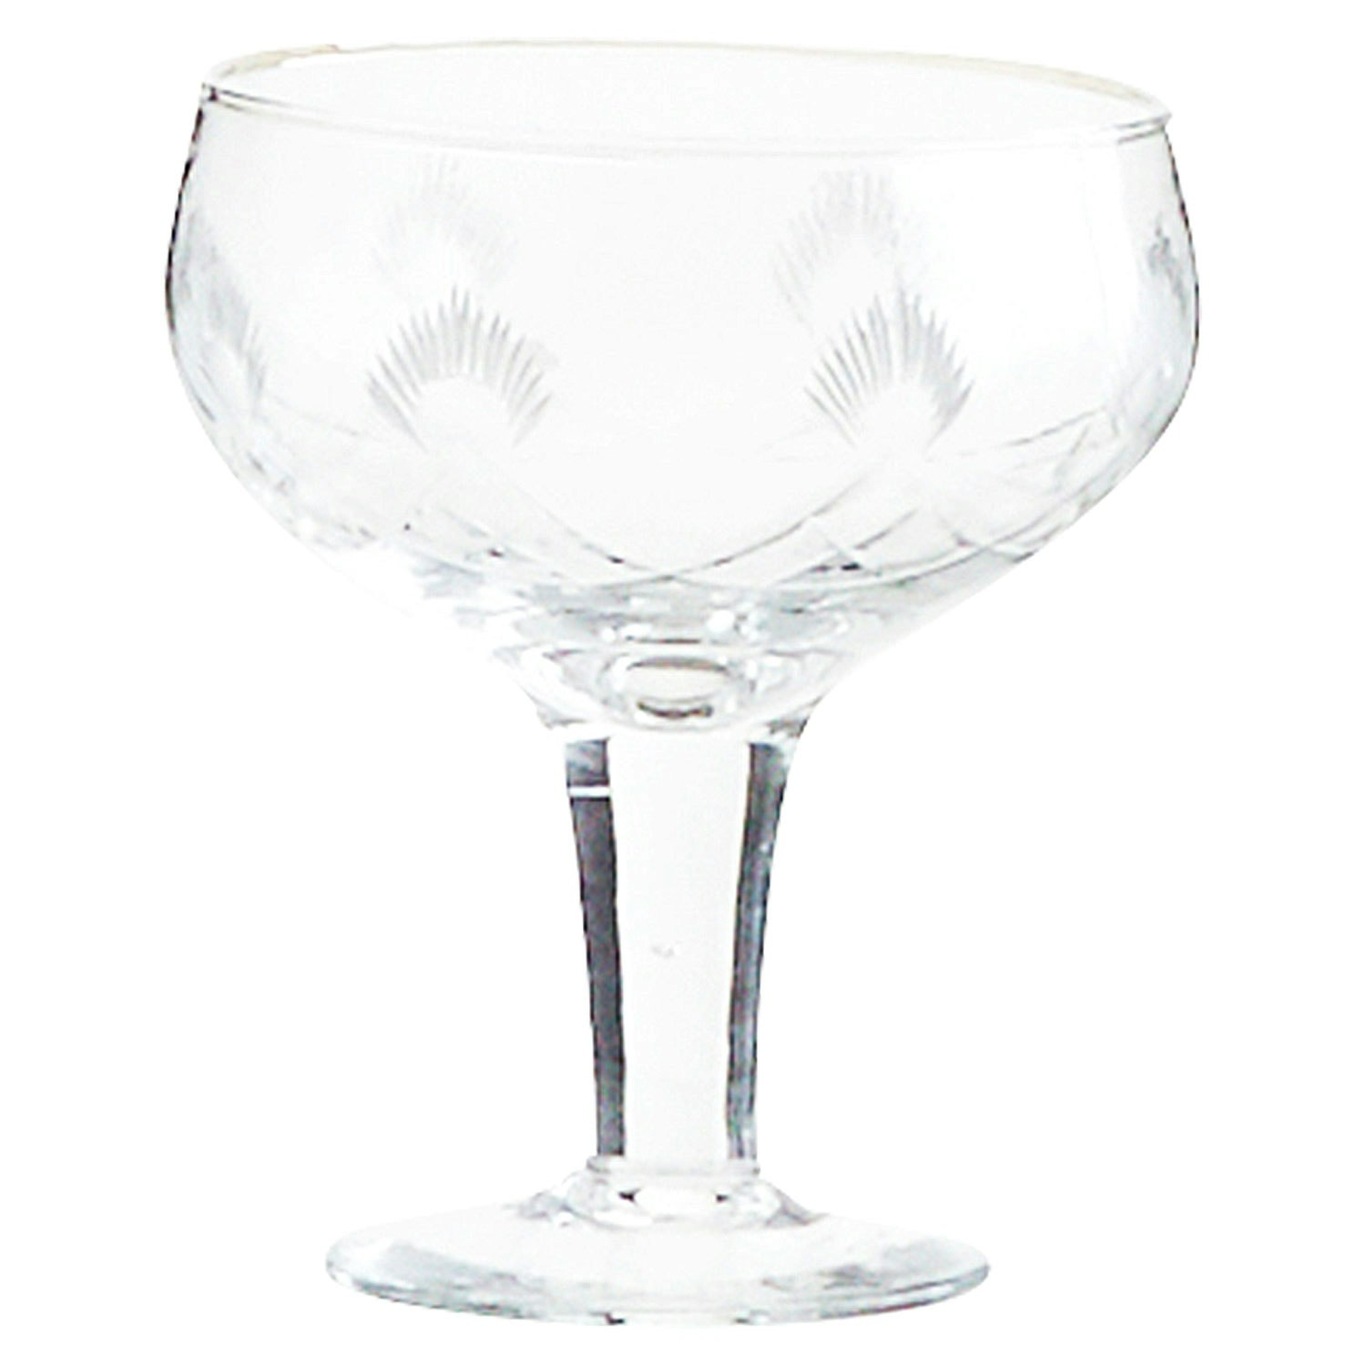 https://royaldesign.com/image/2/madam-stoltz-cocktail-glass-with-cut-10-cl-0?w=800&quality=80